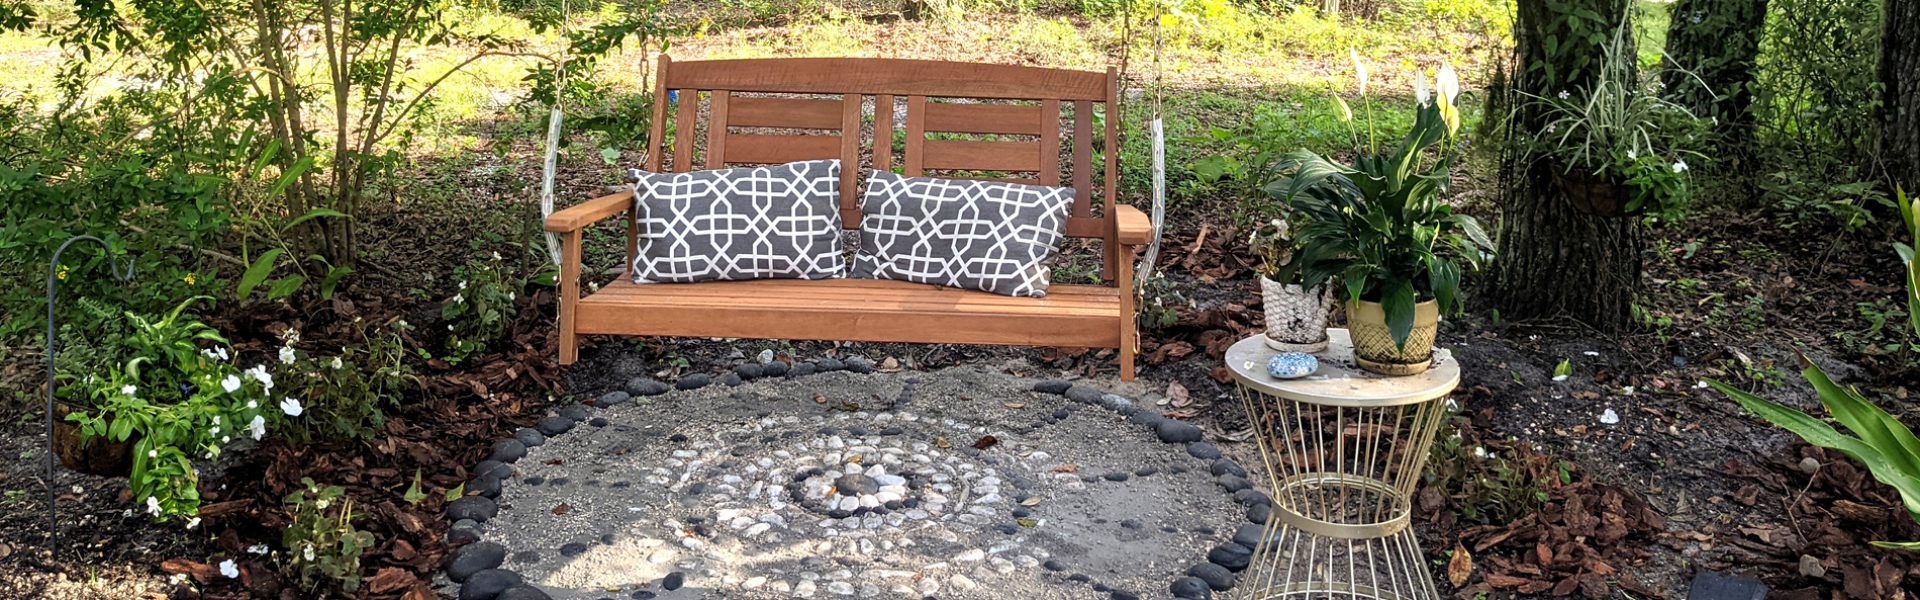 Swing bench moon garden pebble/stone mosaic